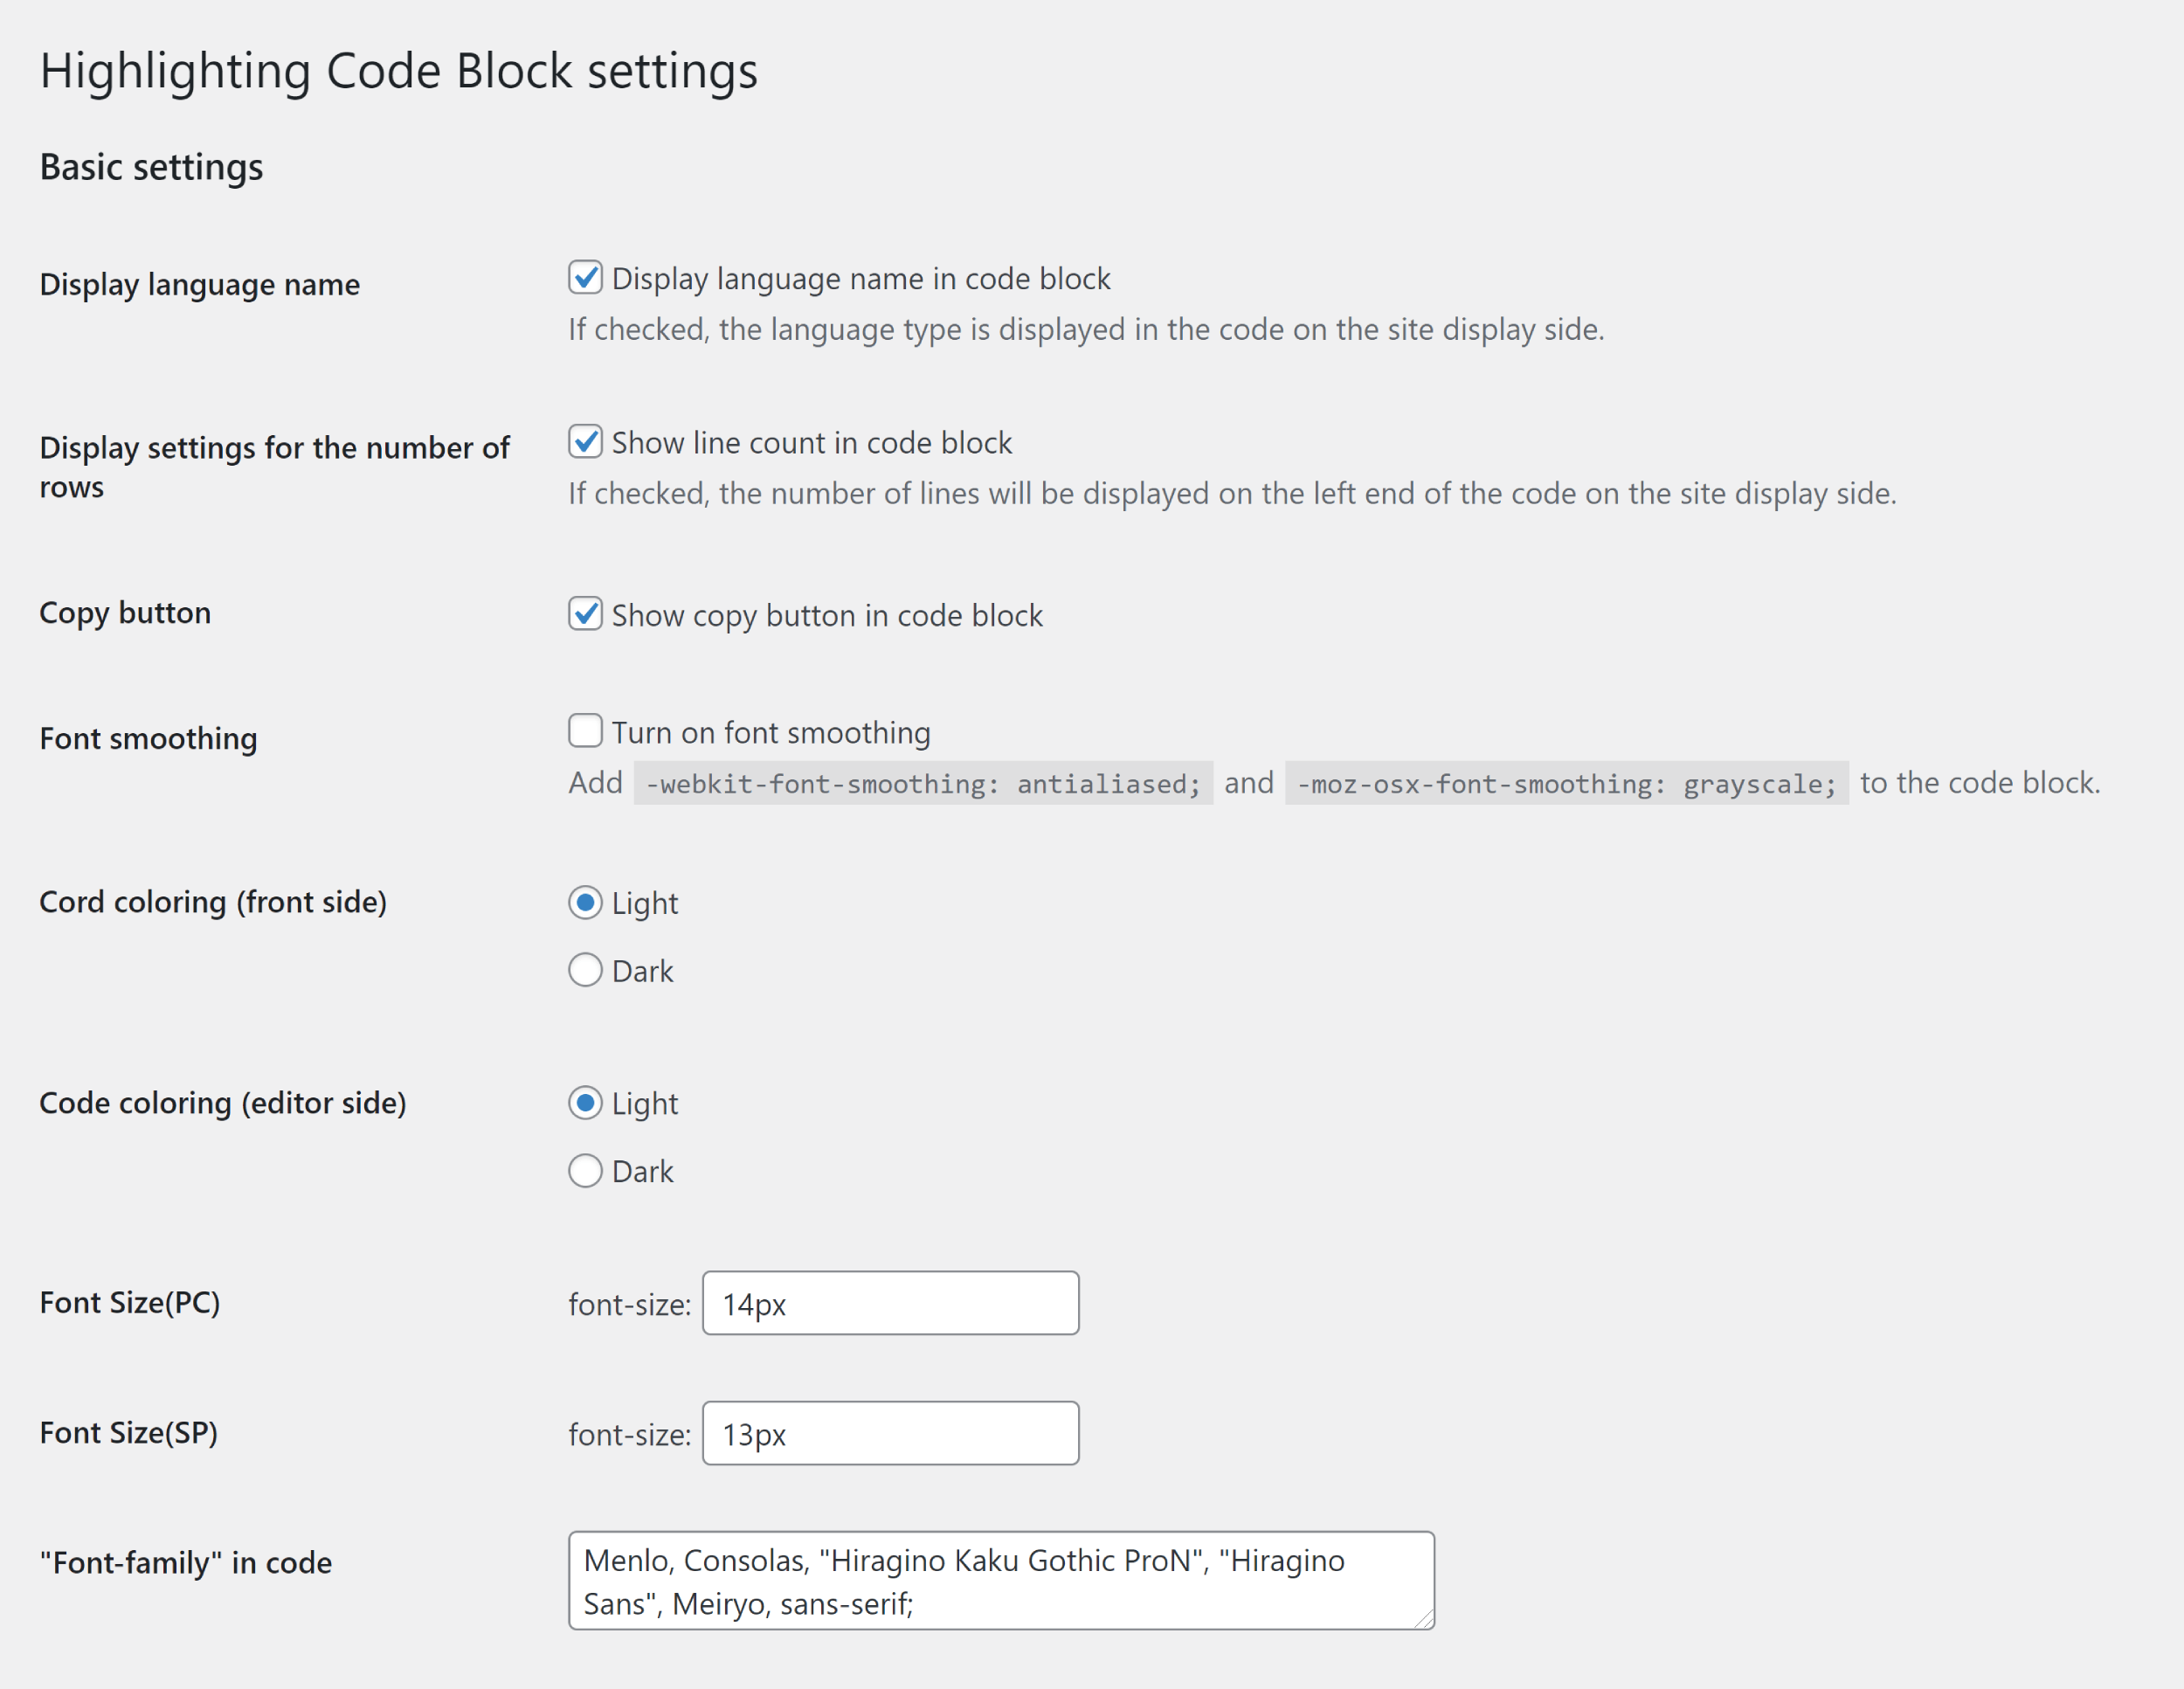 Basic Settings of Highlighting Code Block